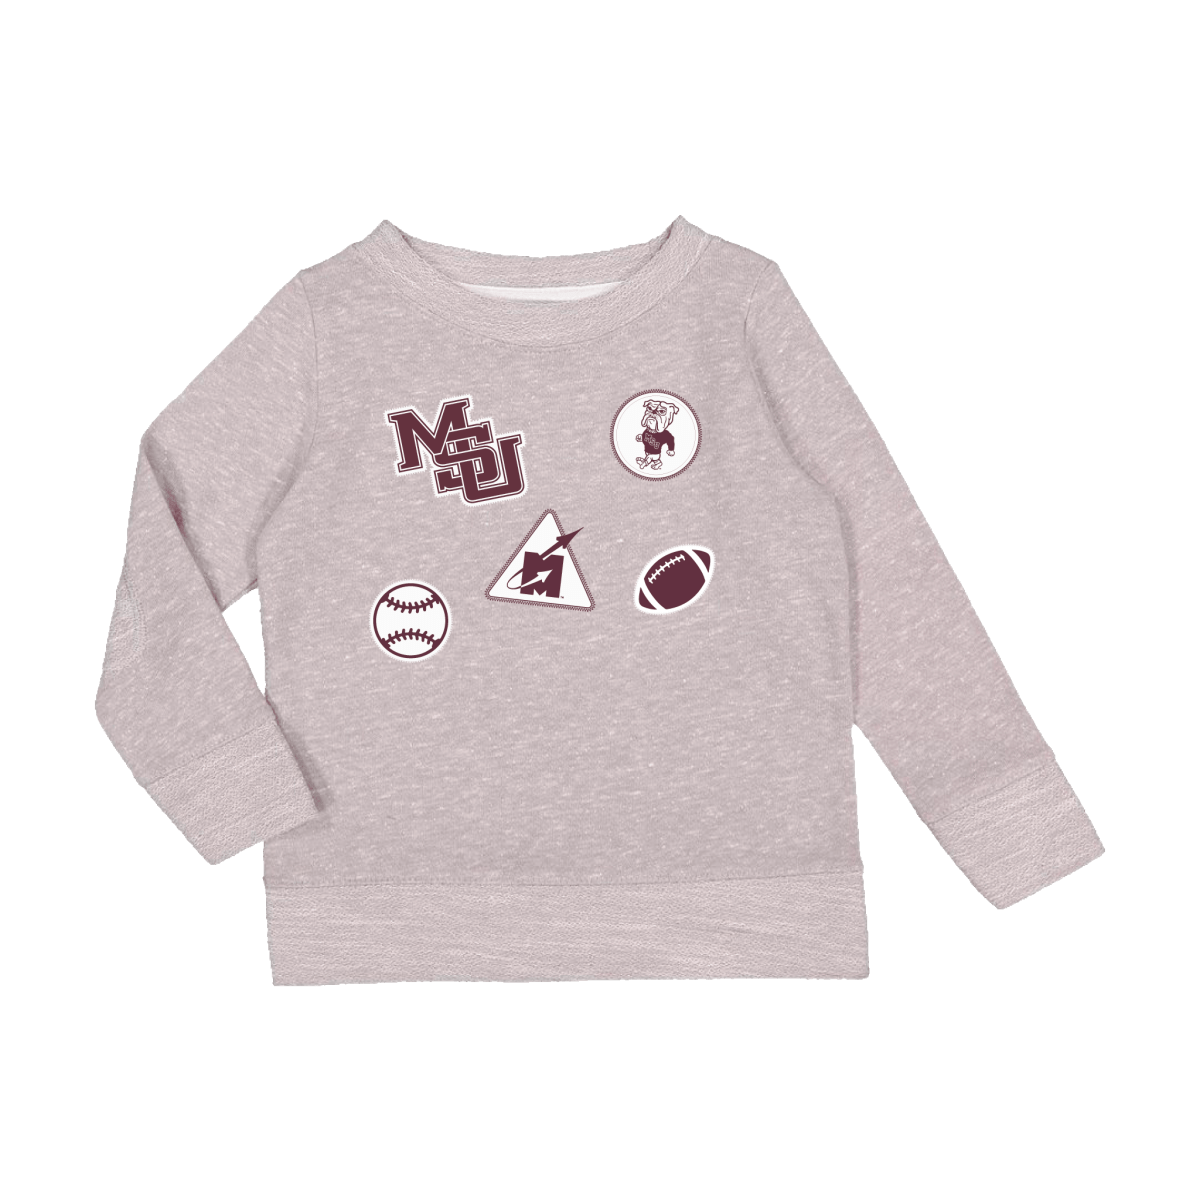 MSU Vault Logos Youth Sweatshirt - Shop B-Unlimited